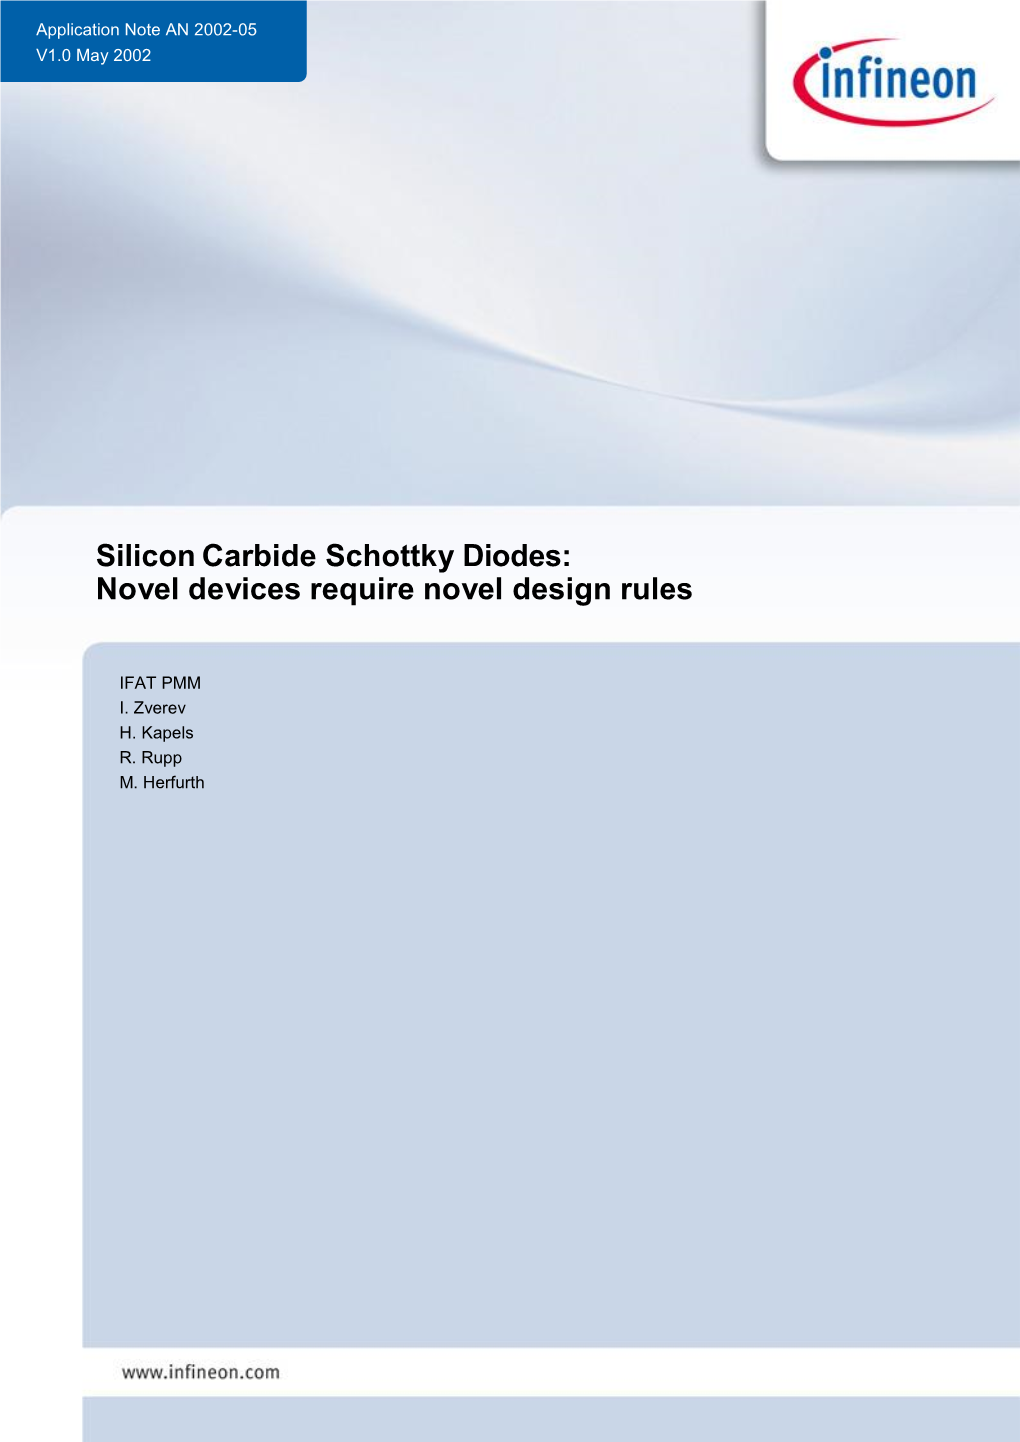 Silicon Carbide Schottky Diodes: Novel Devices Require Novel Design Rules